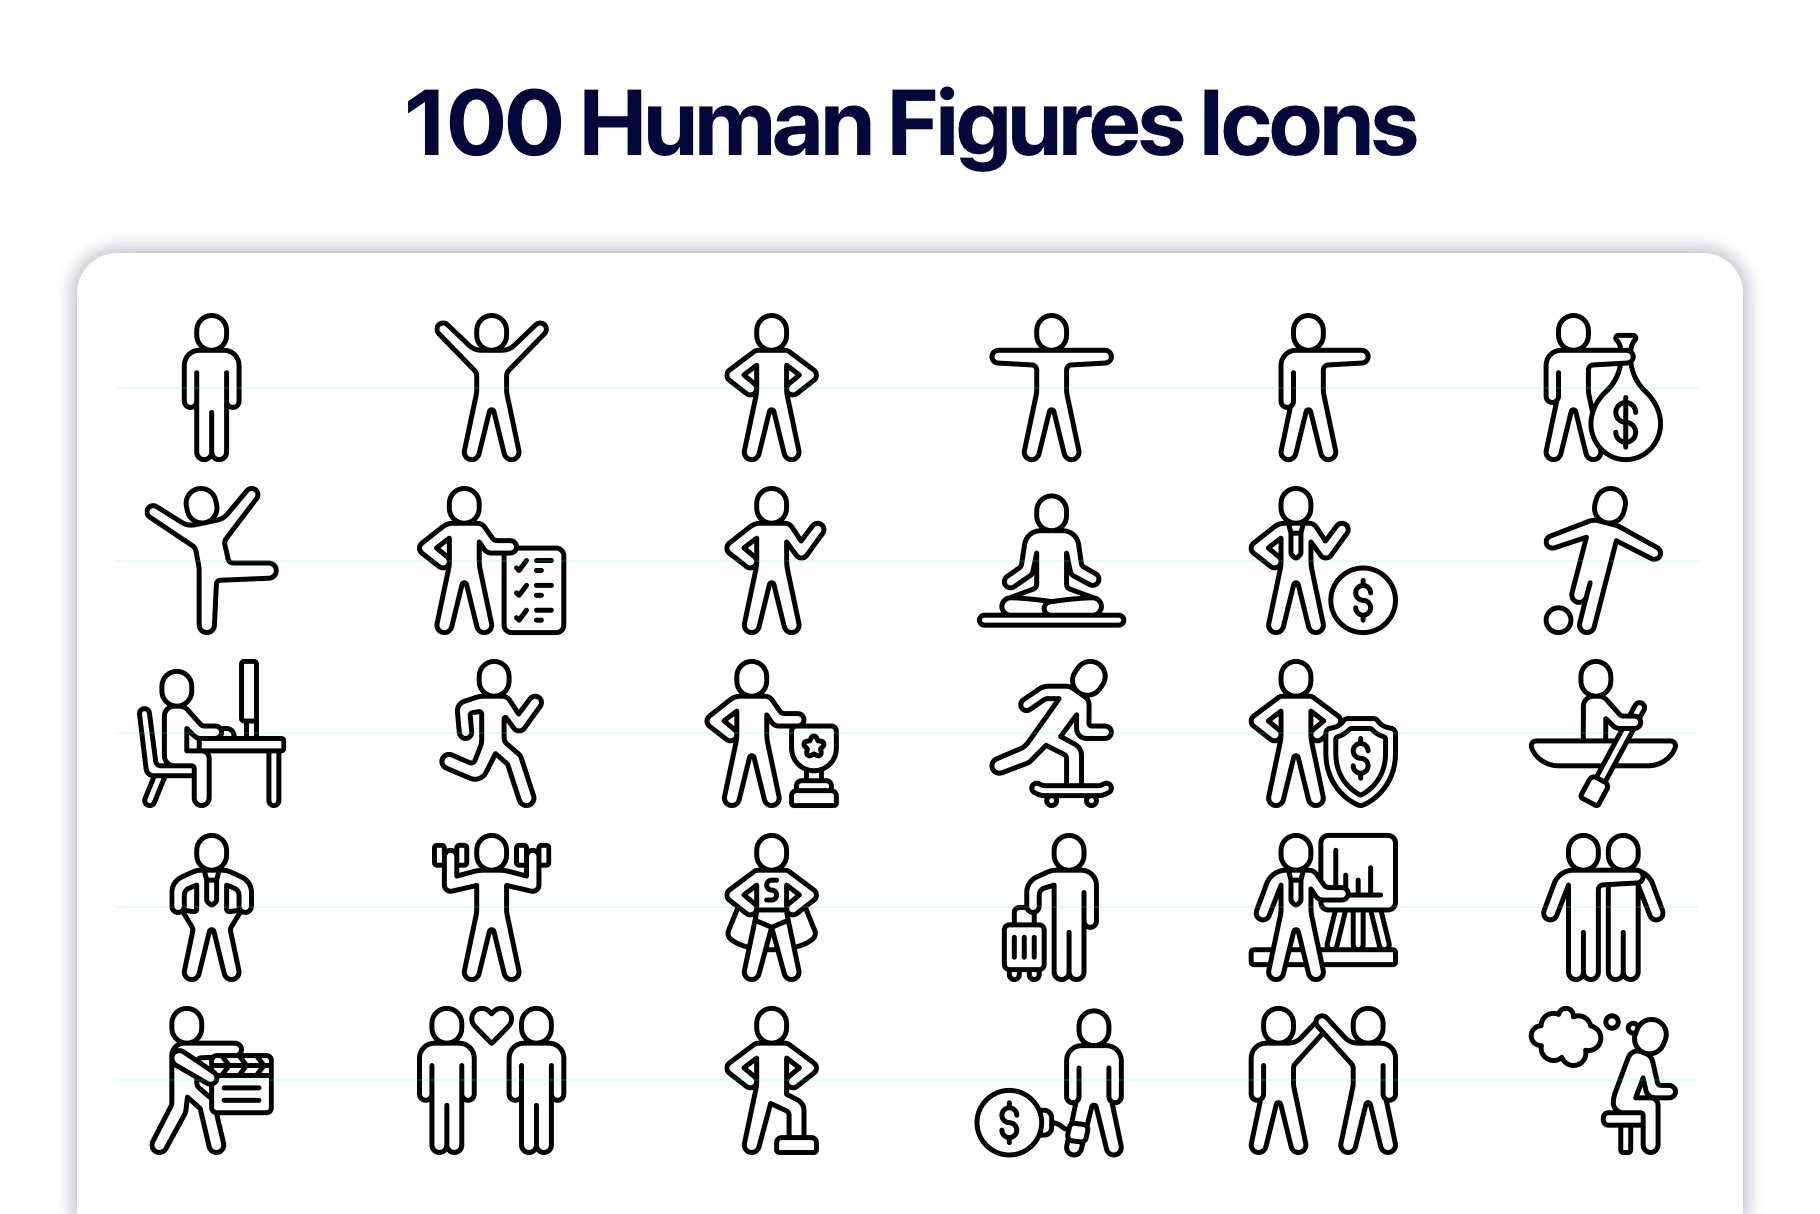 100 human figures icons.